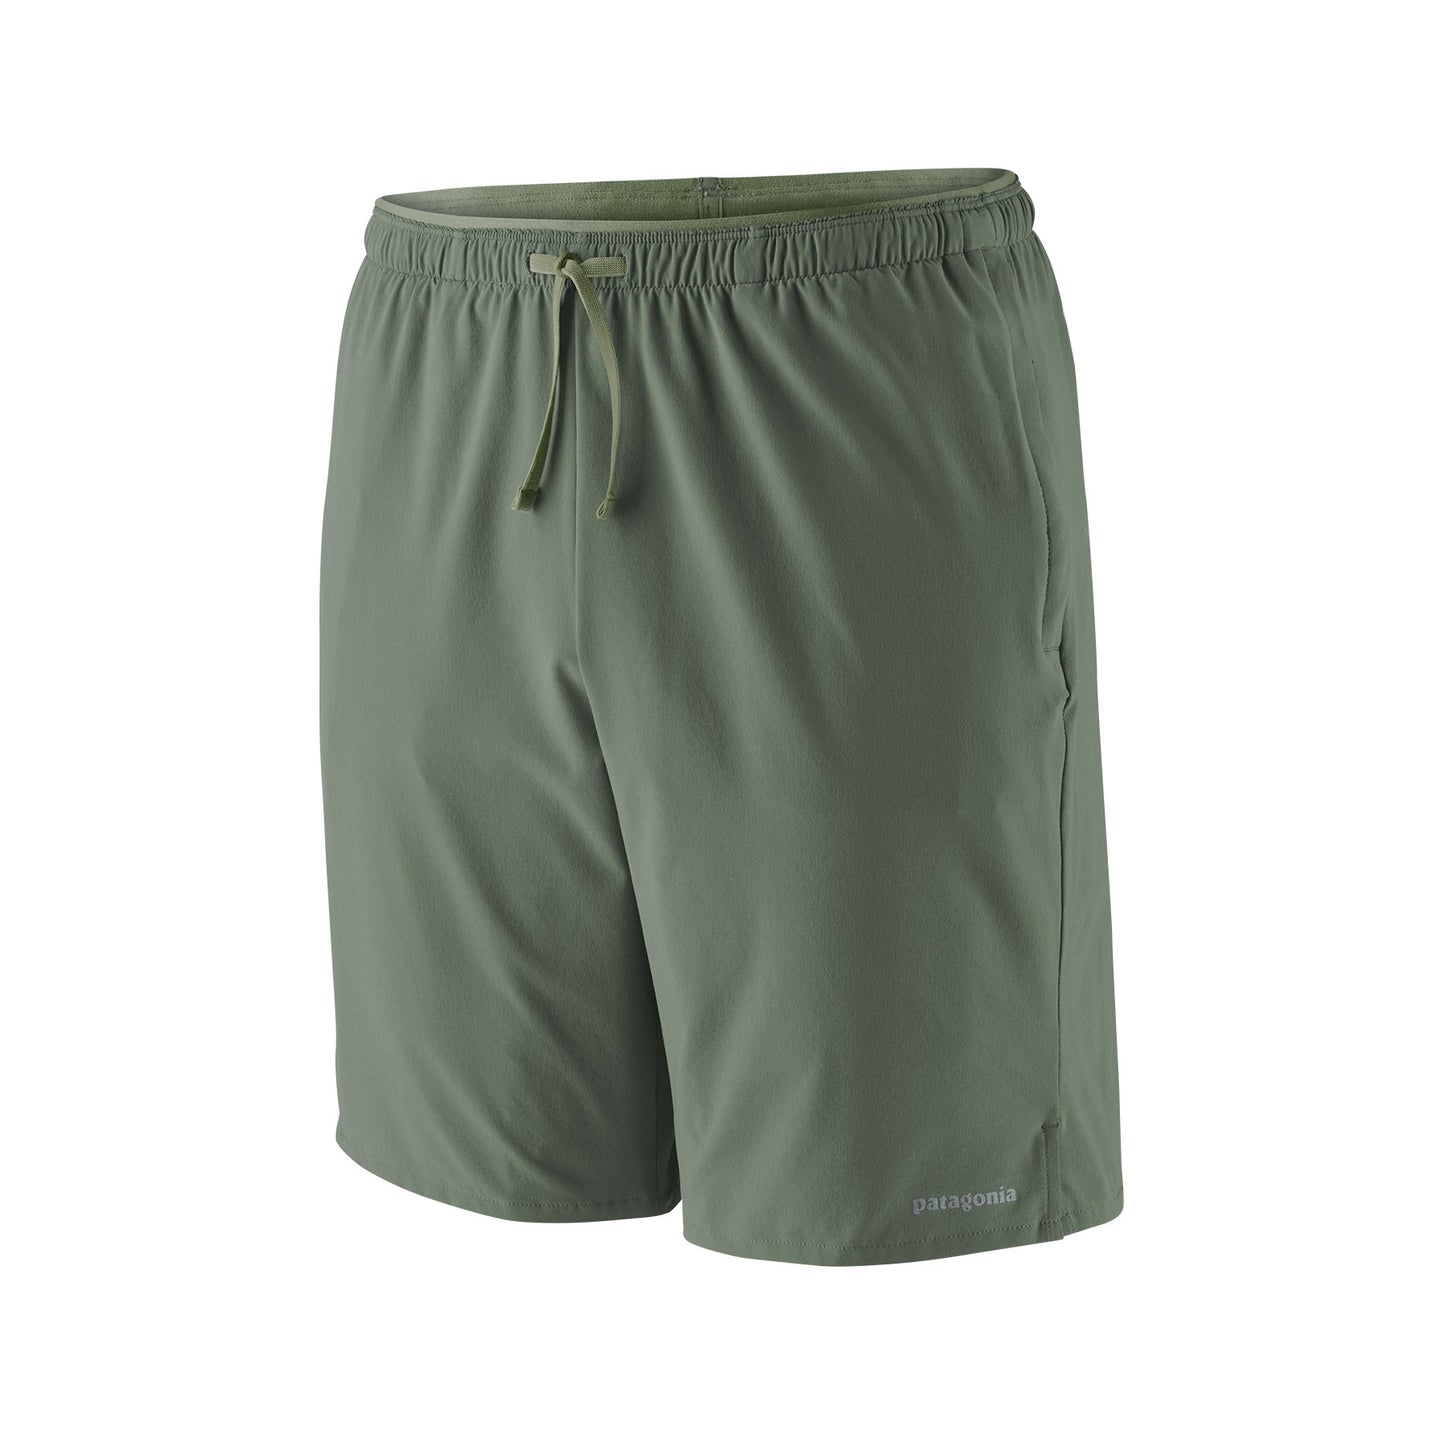 Patagonia®男款 Multi Trails Shorts - 8"